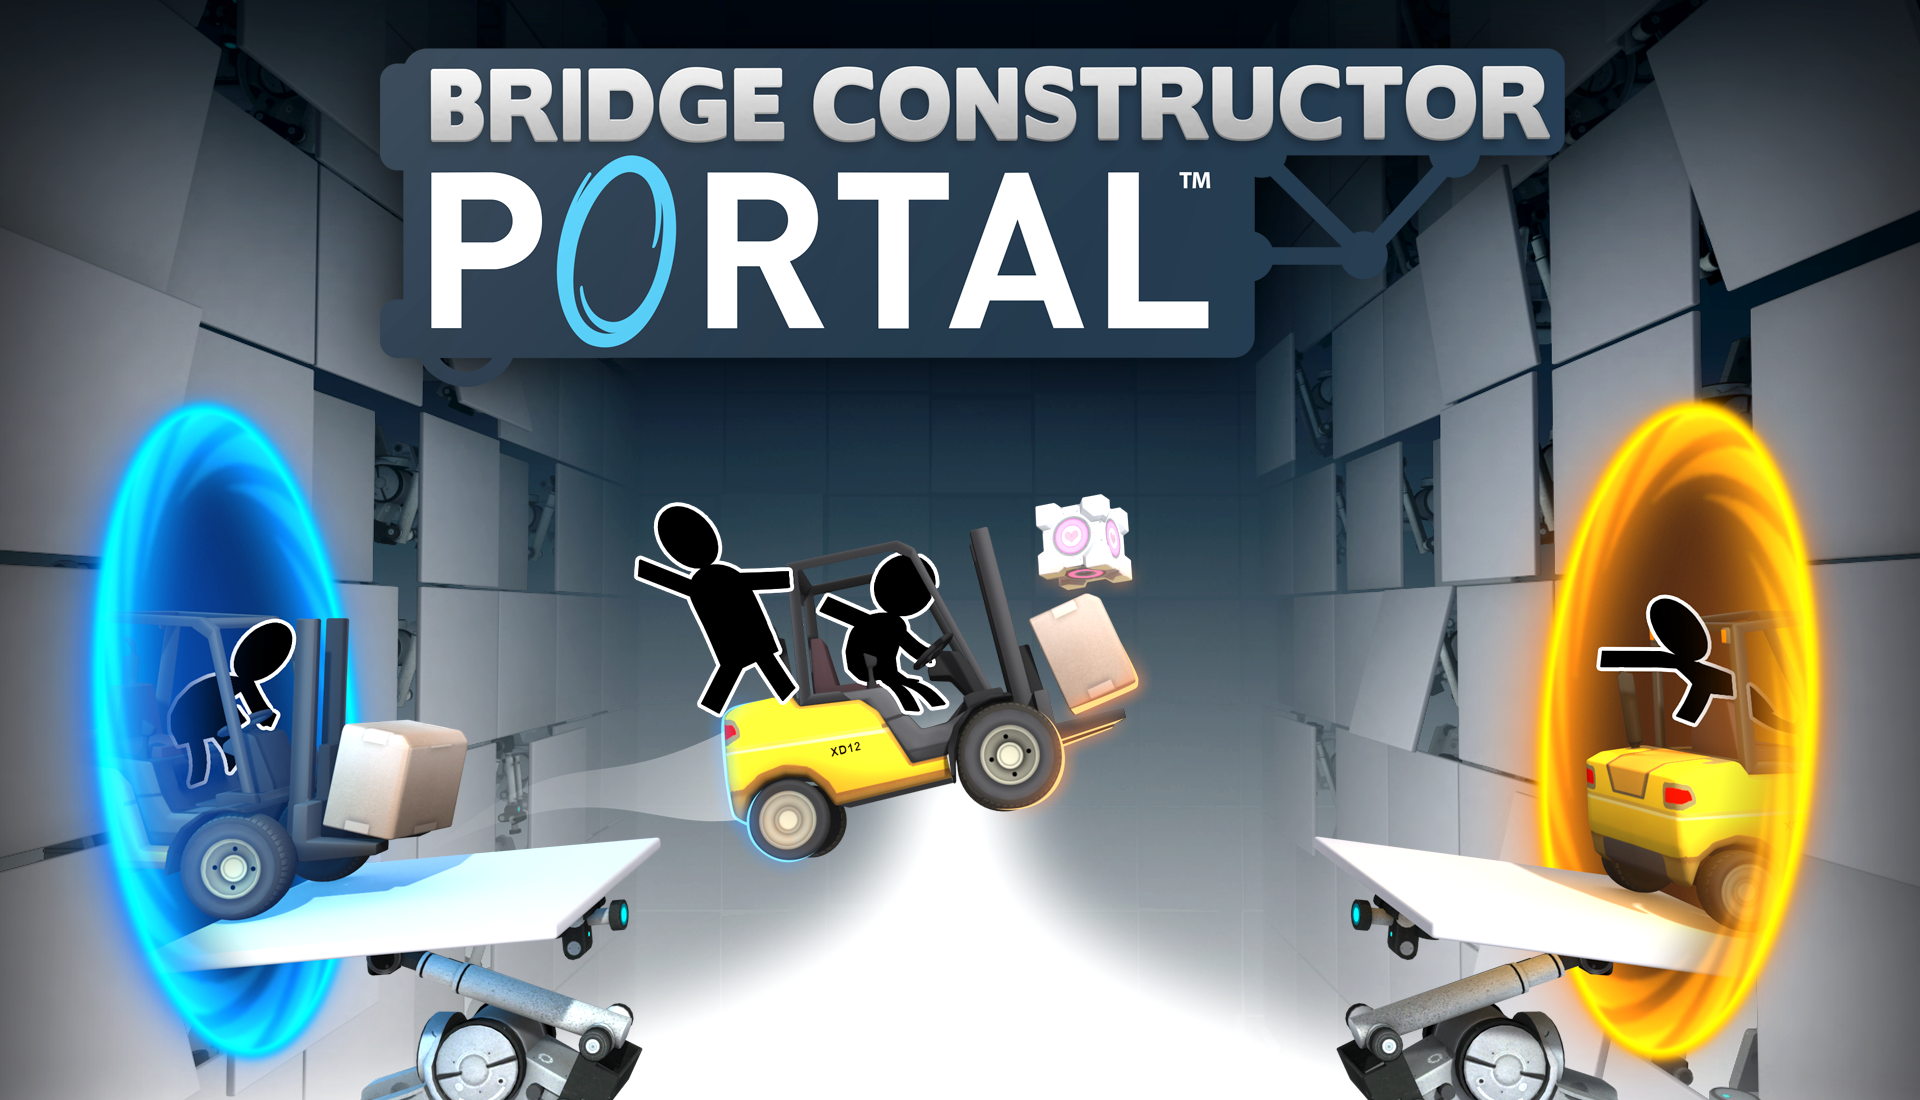 The Bridge Constructor Portal level editor is here!